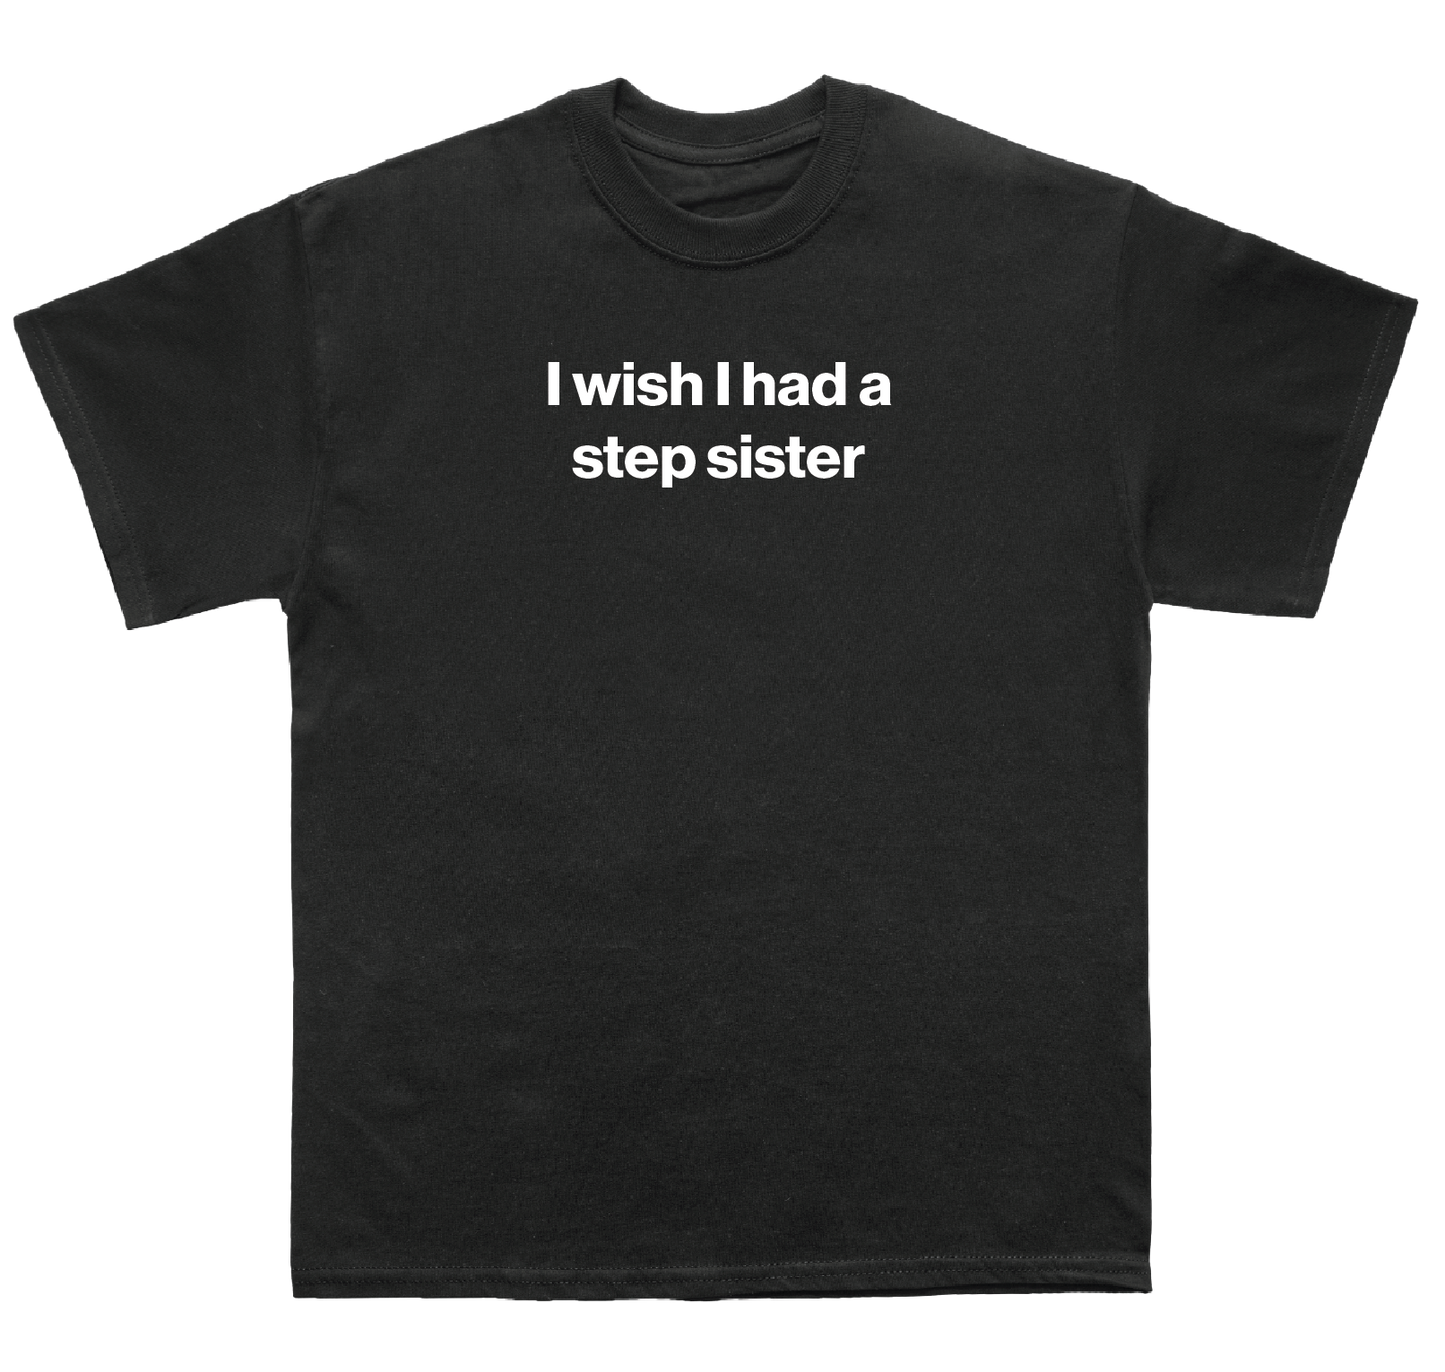 I wish I had a step sister shirt